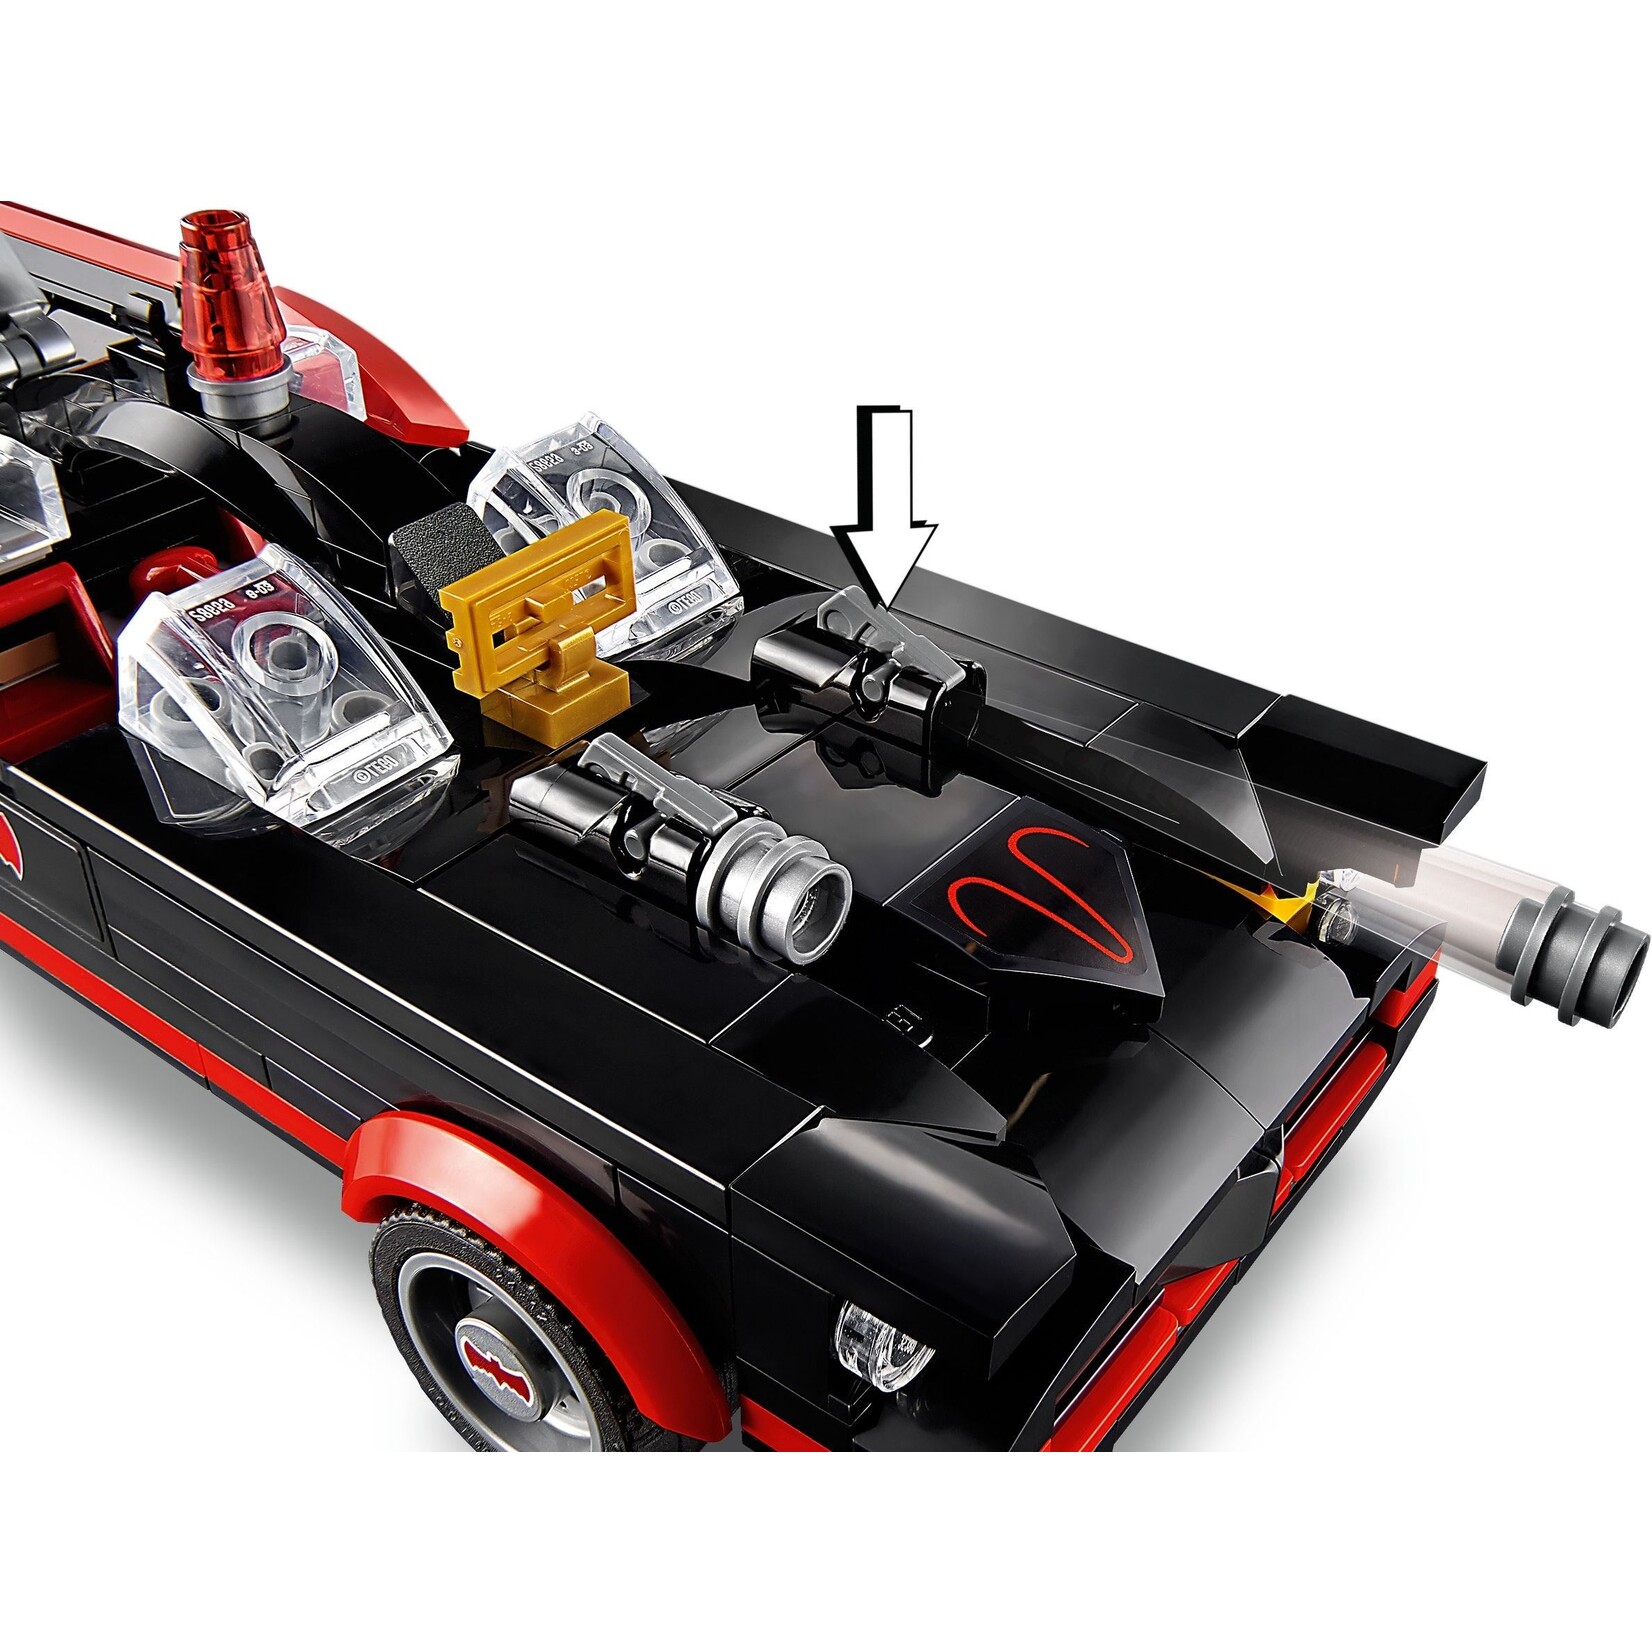 LEGO Batman™ klassieke tv-serie Batmobile™ - 76188